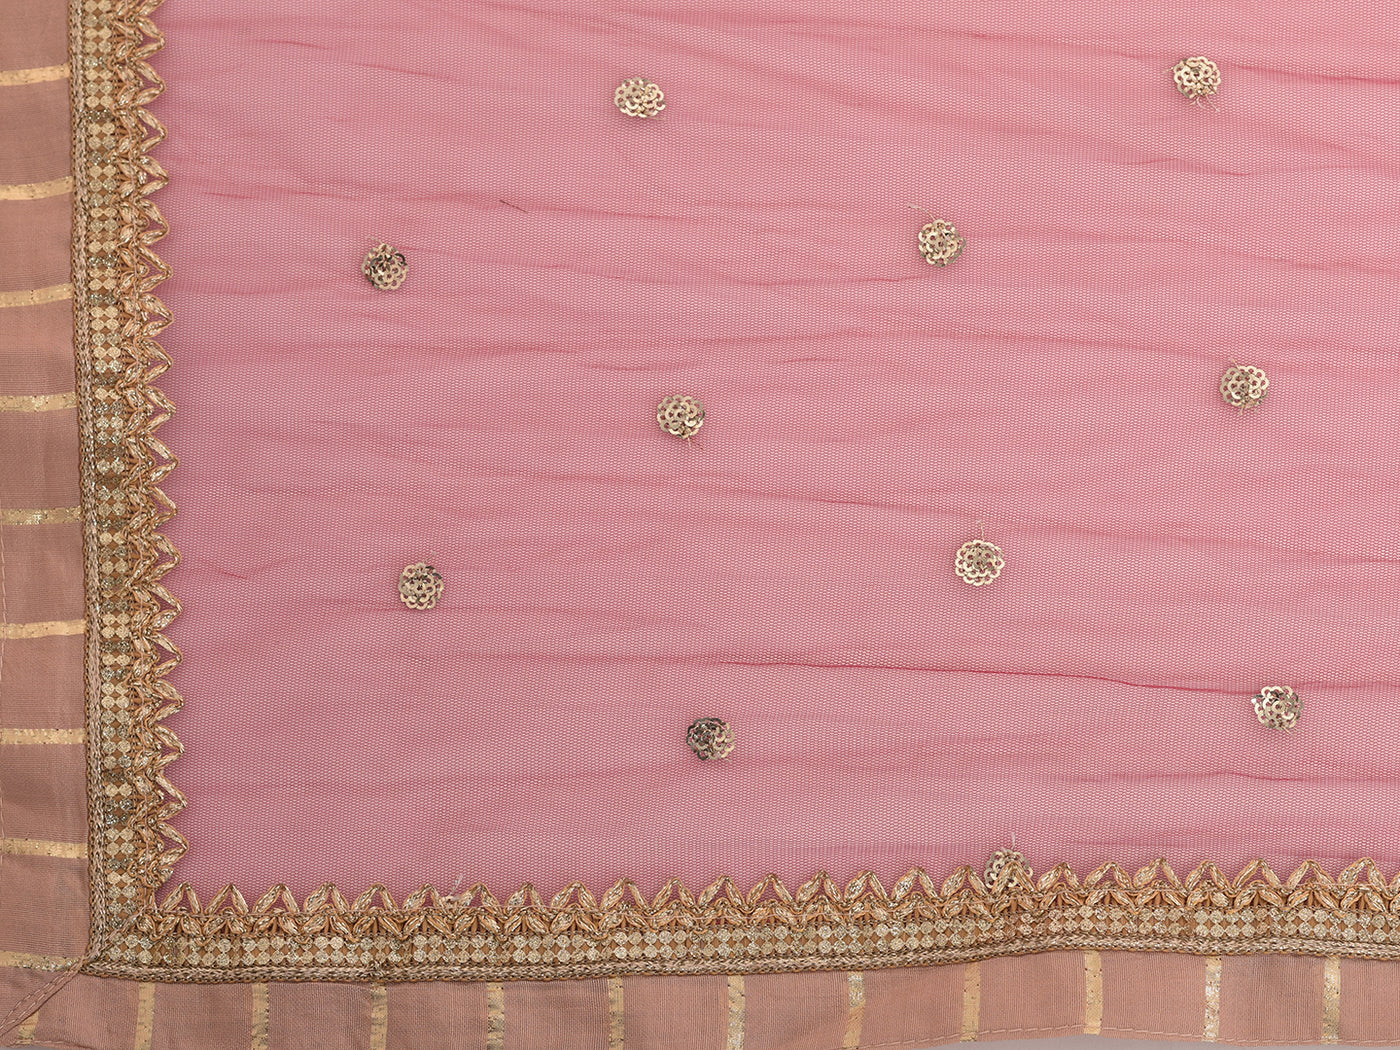 Neeru'S Beige Color, Georgette Fabric Gown